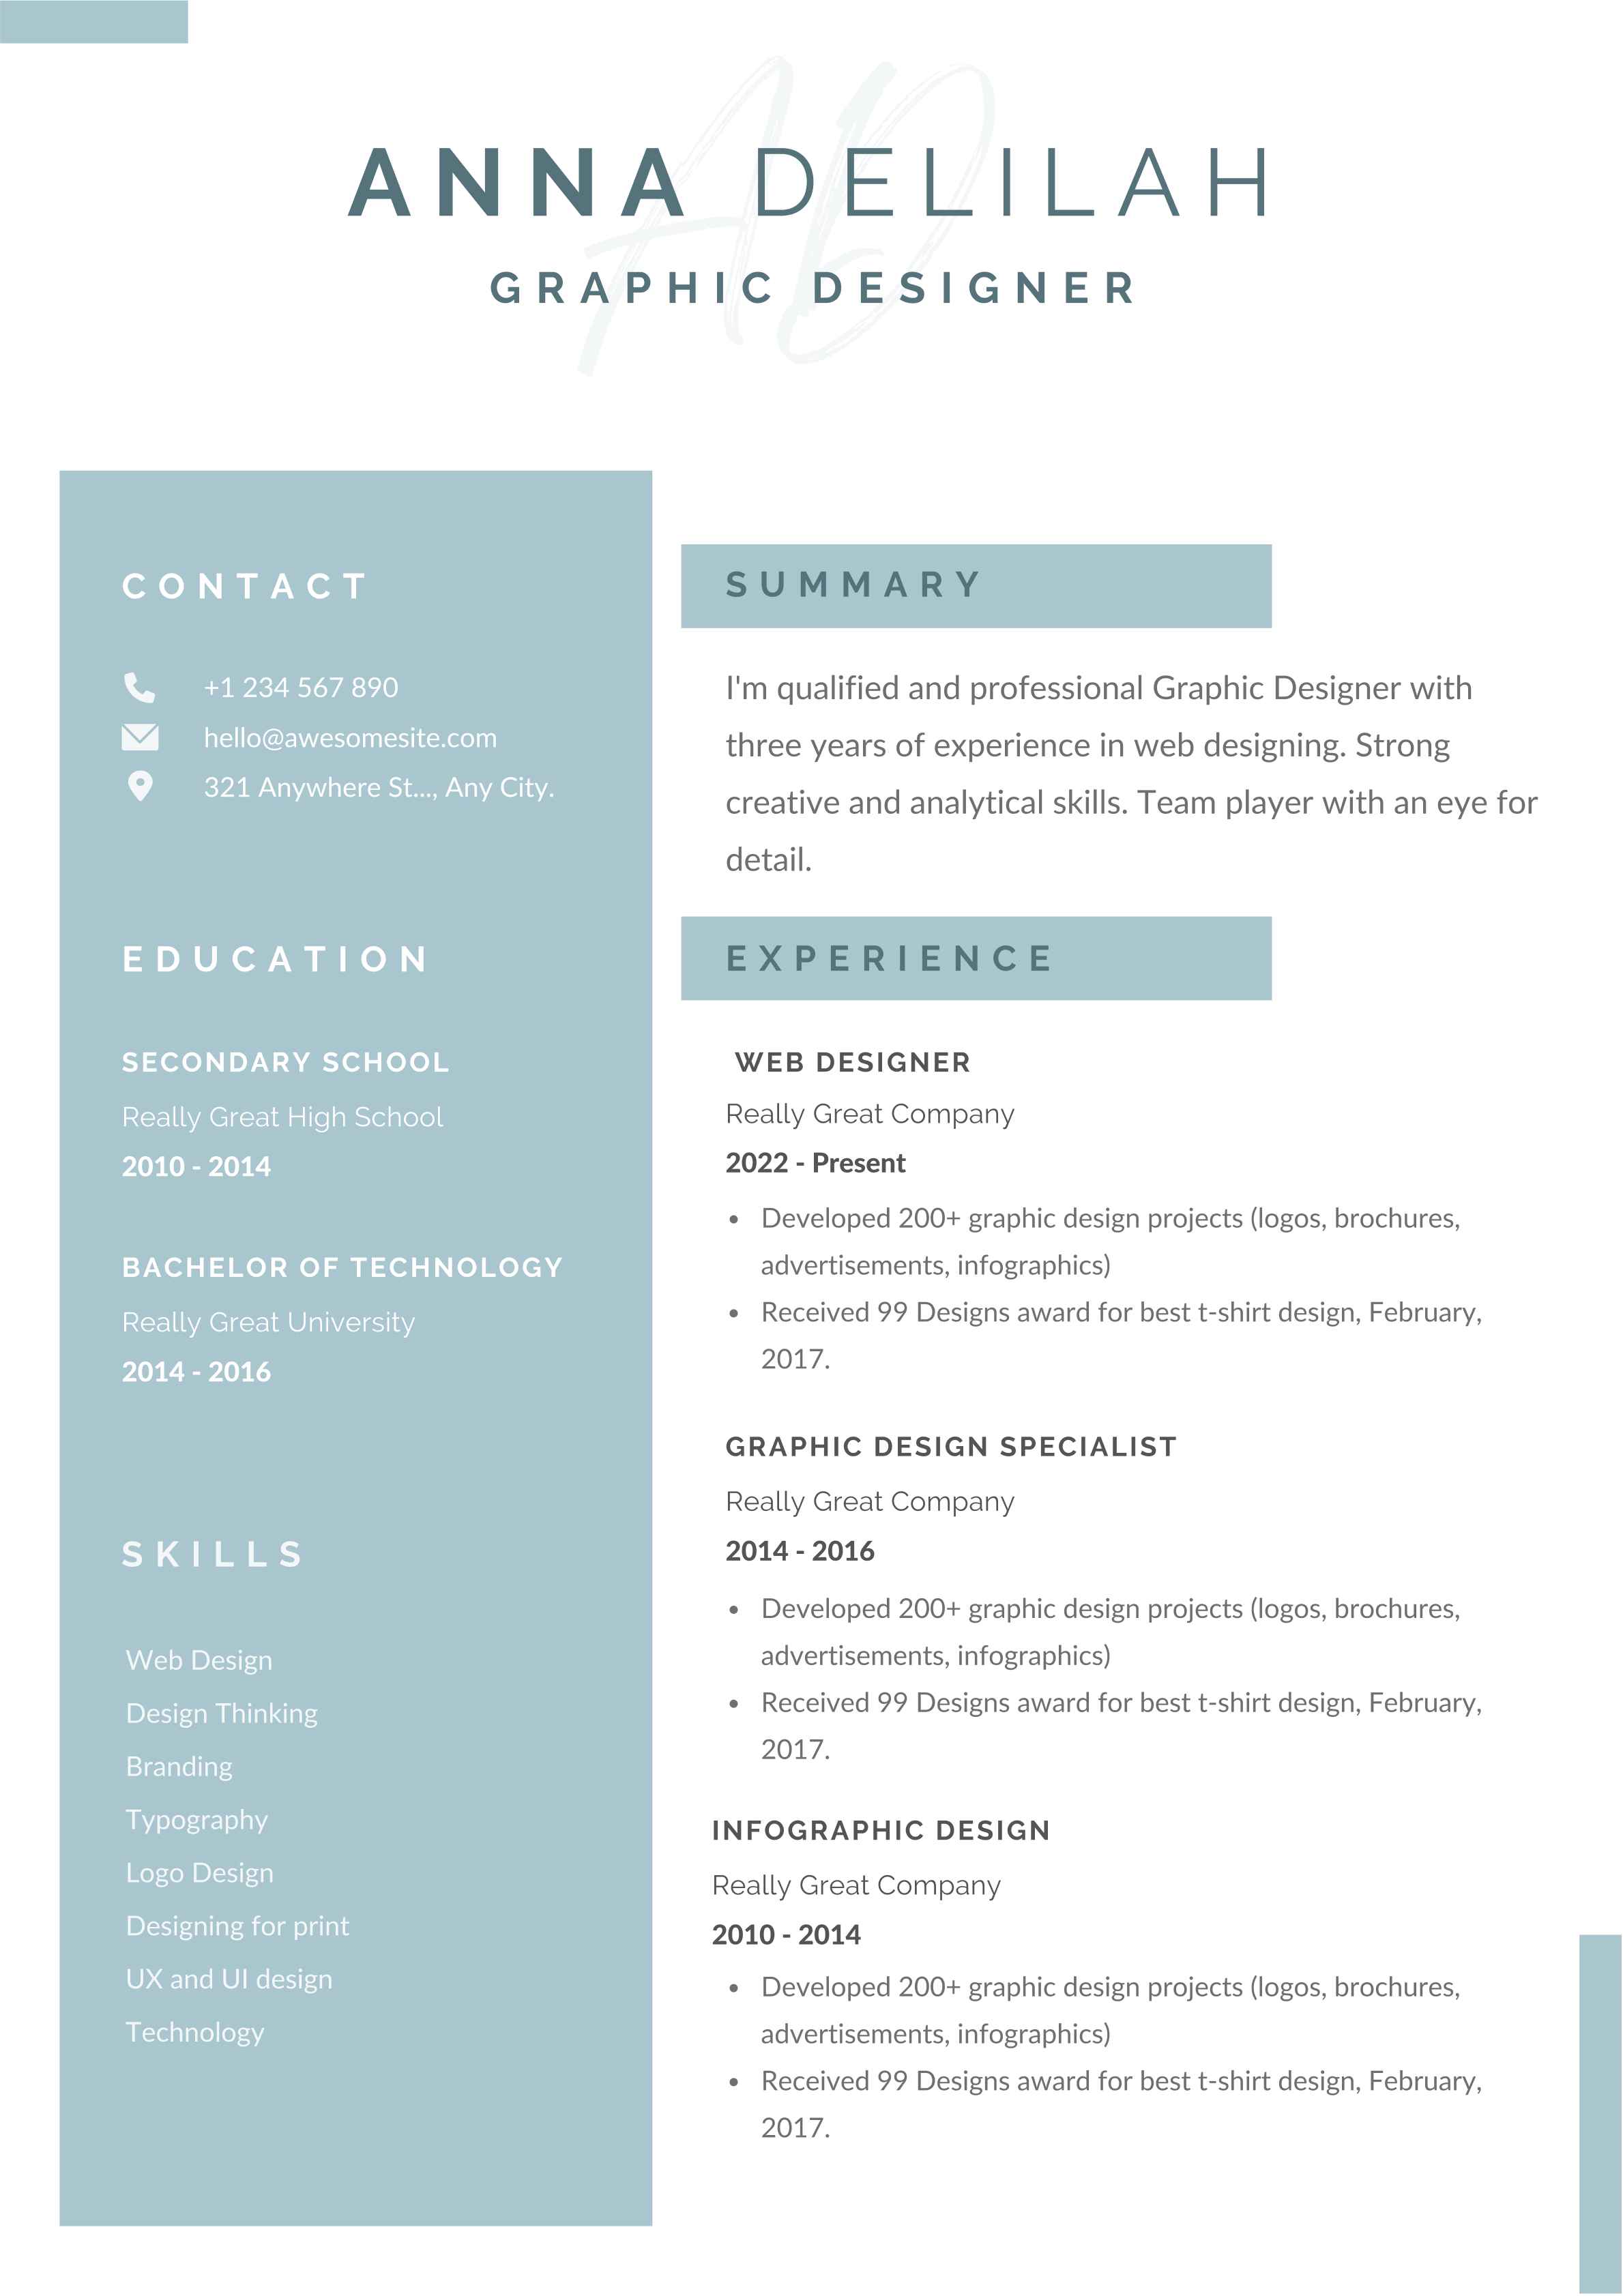 Blue and white resume for graphic designer.